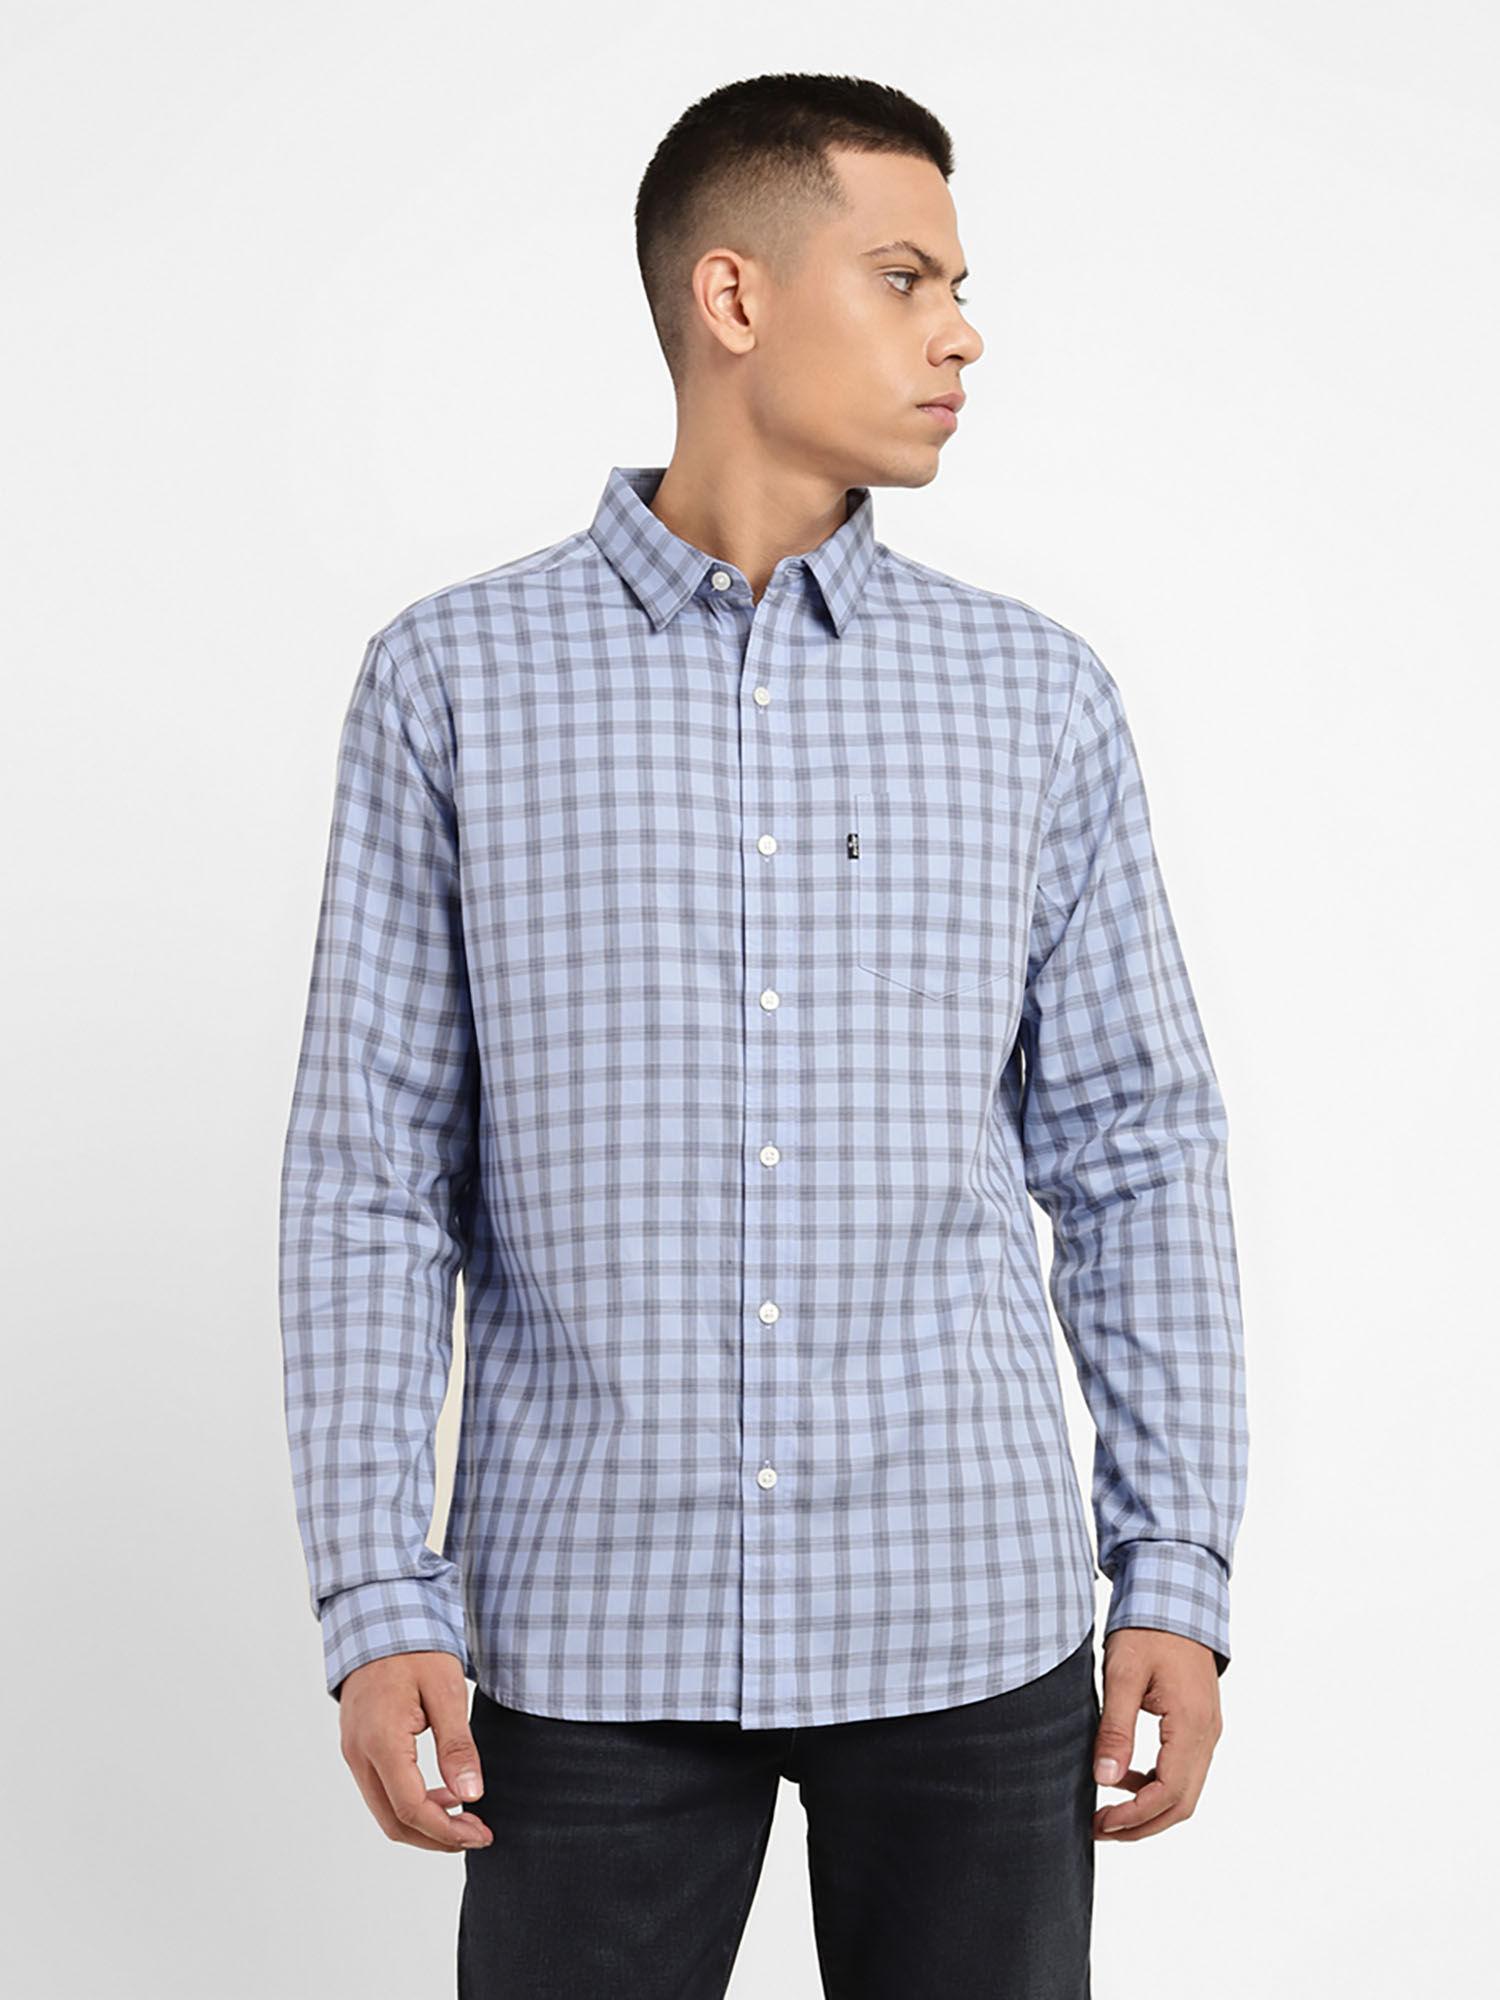 men's-blue-checkered-slim-fit-shirt